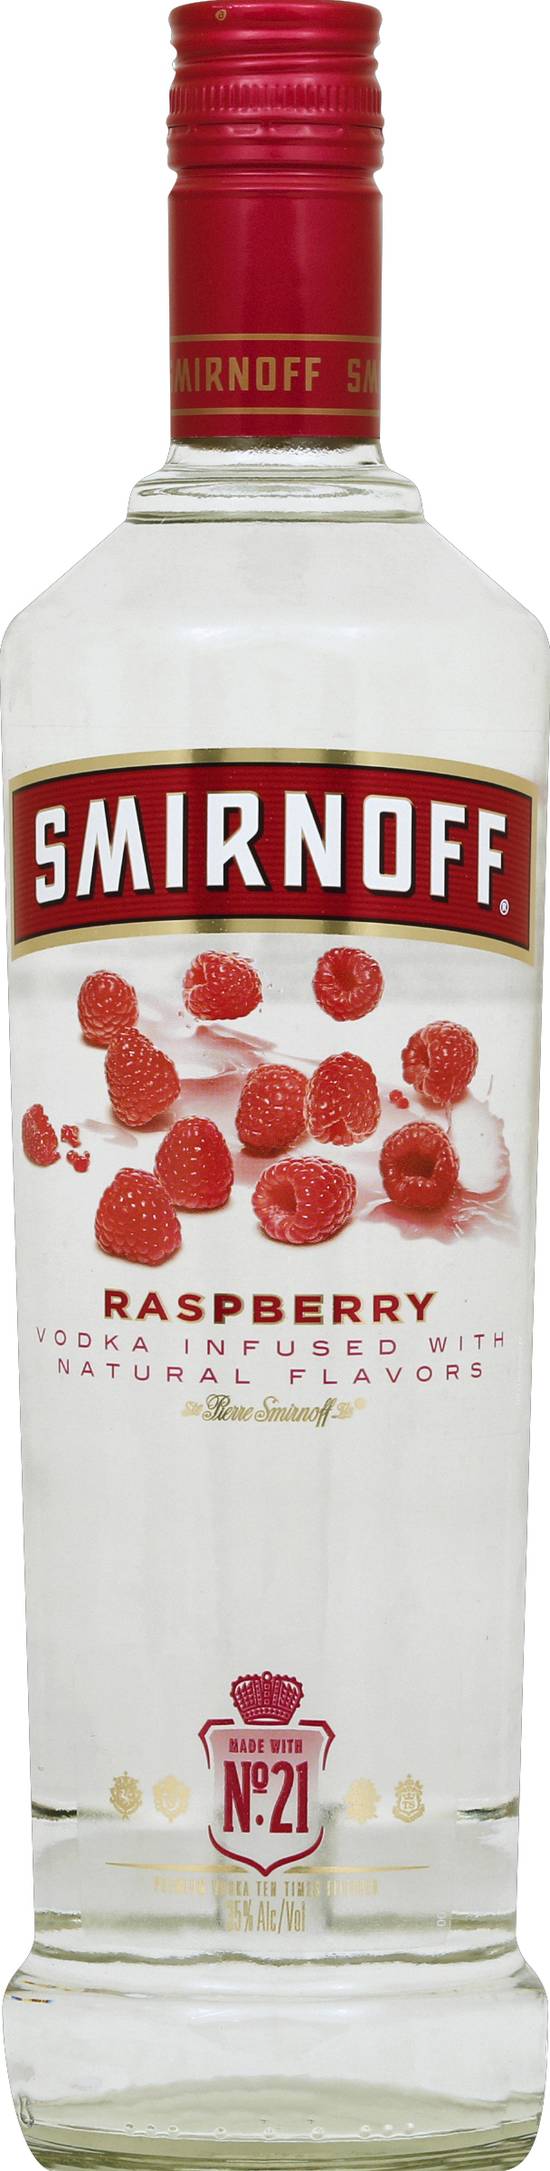 Smirnoff Vodka (Raspberry)